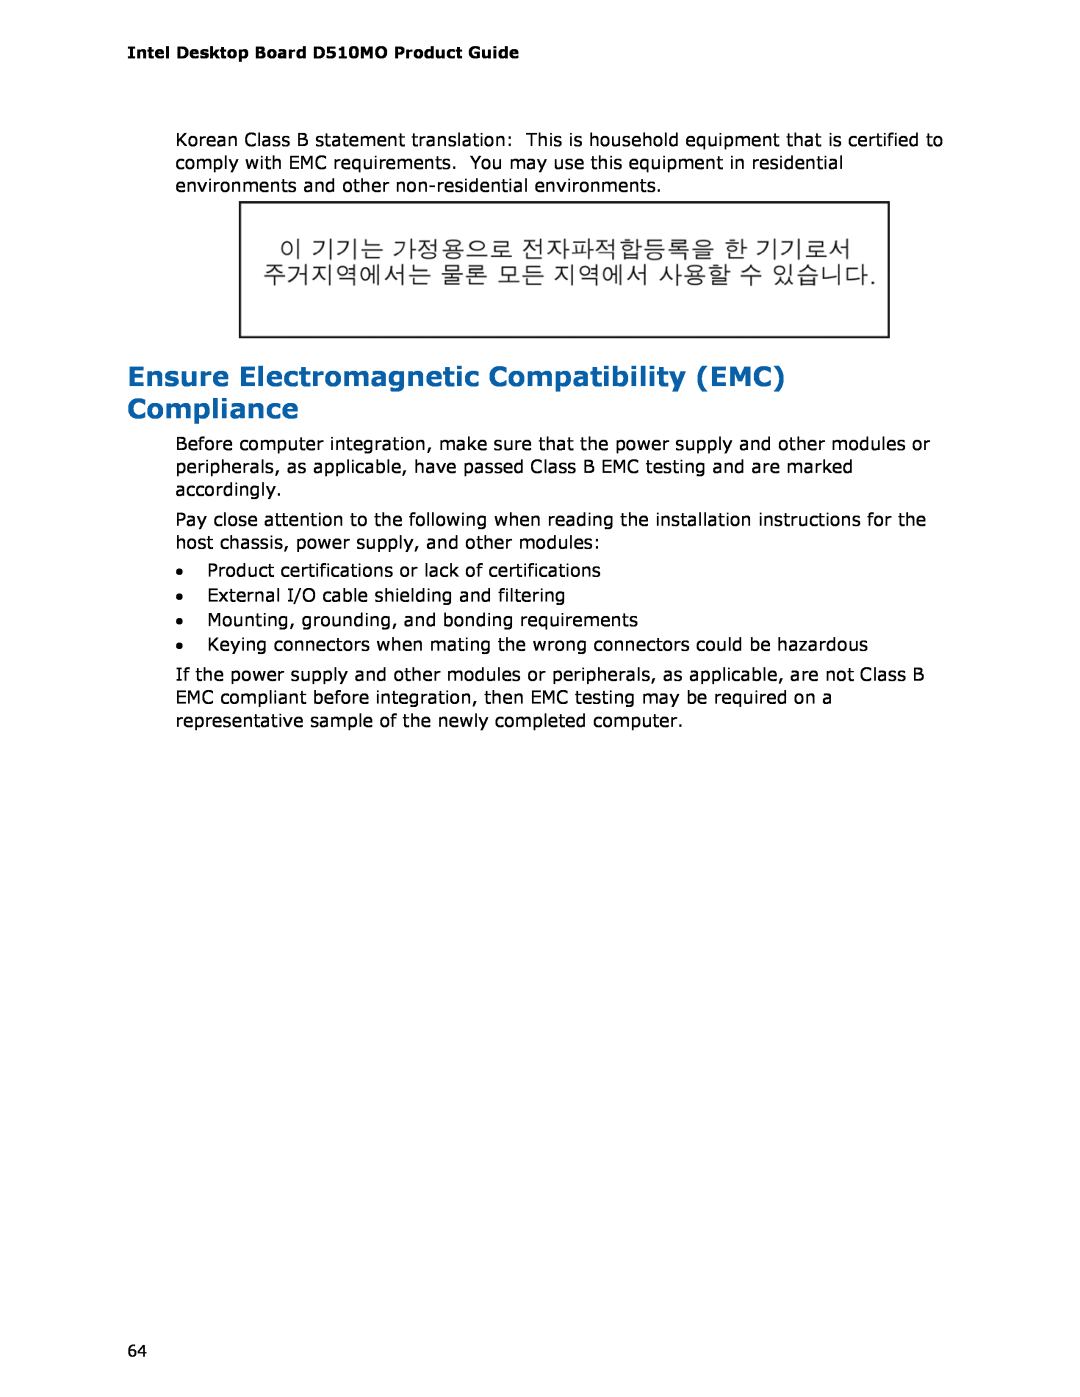 Intel D510MO manual Ensure Electromagnetic Compatibility EMC Compliance 